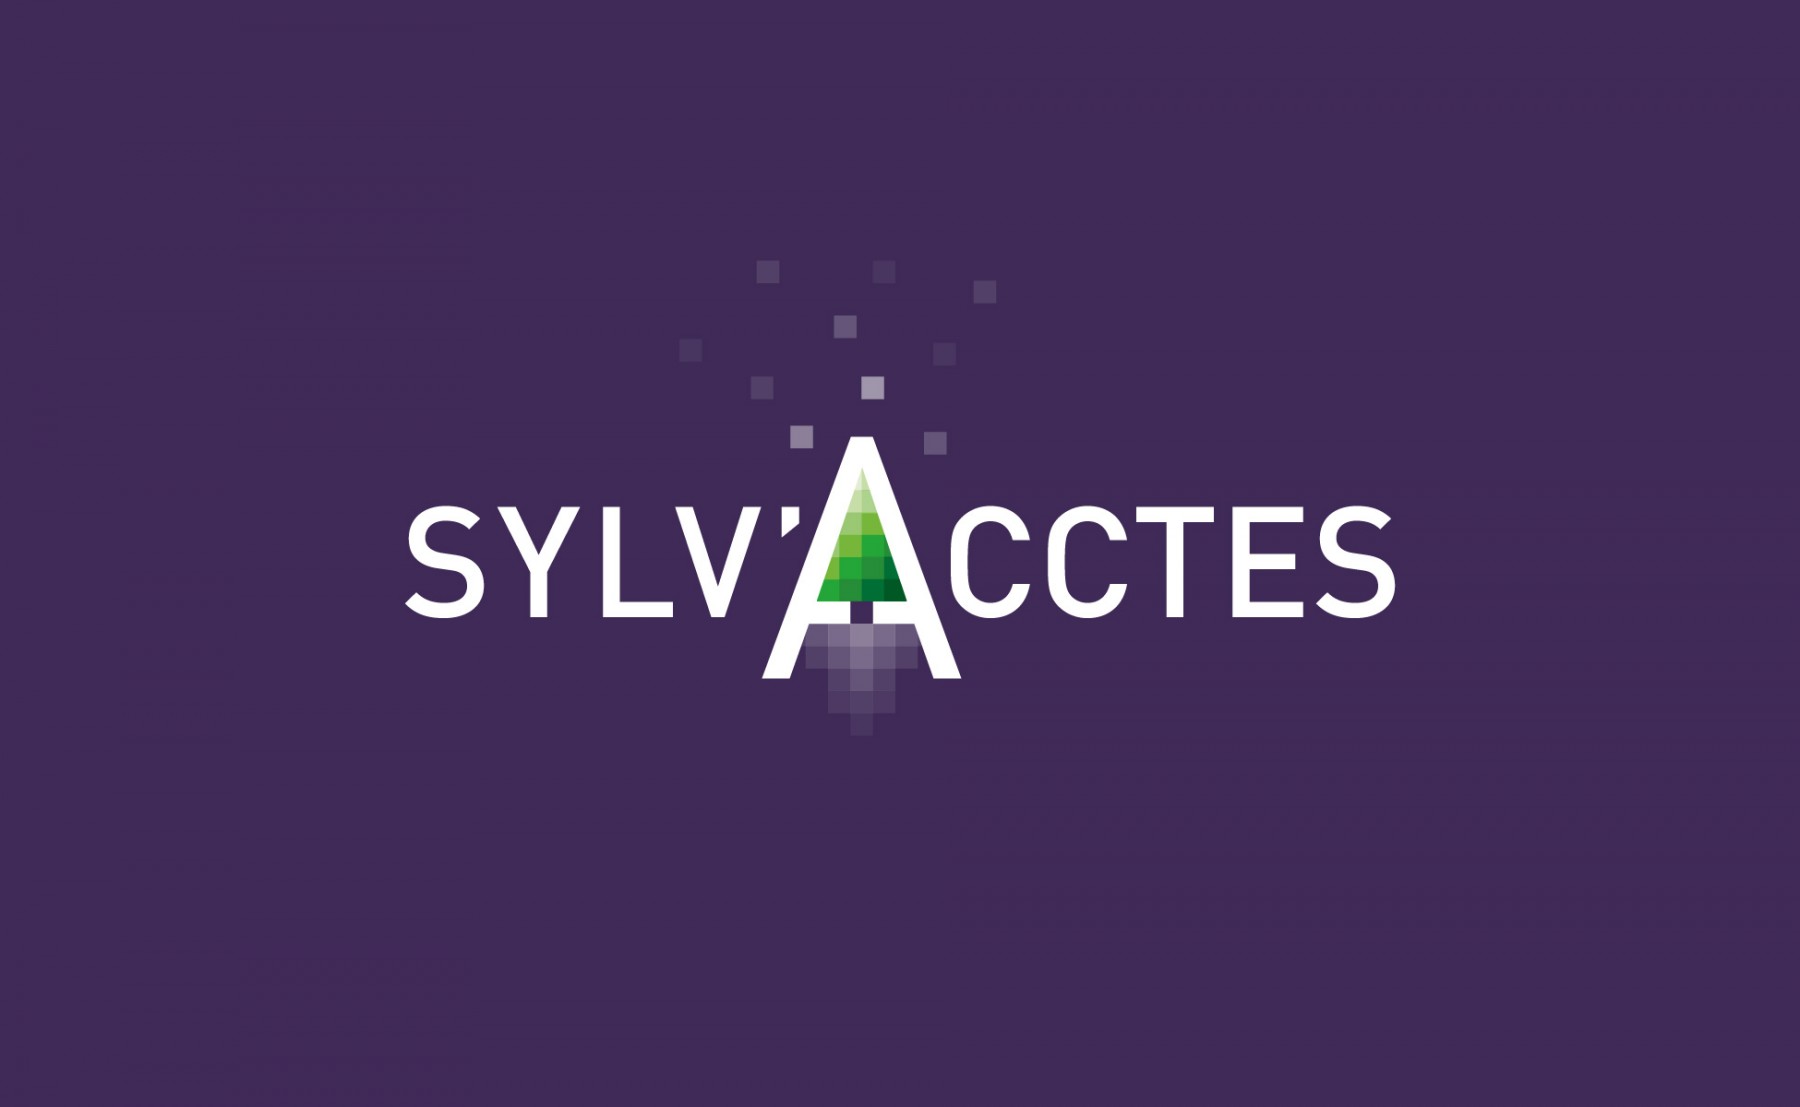 logo-sylvacctes